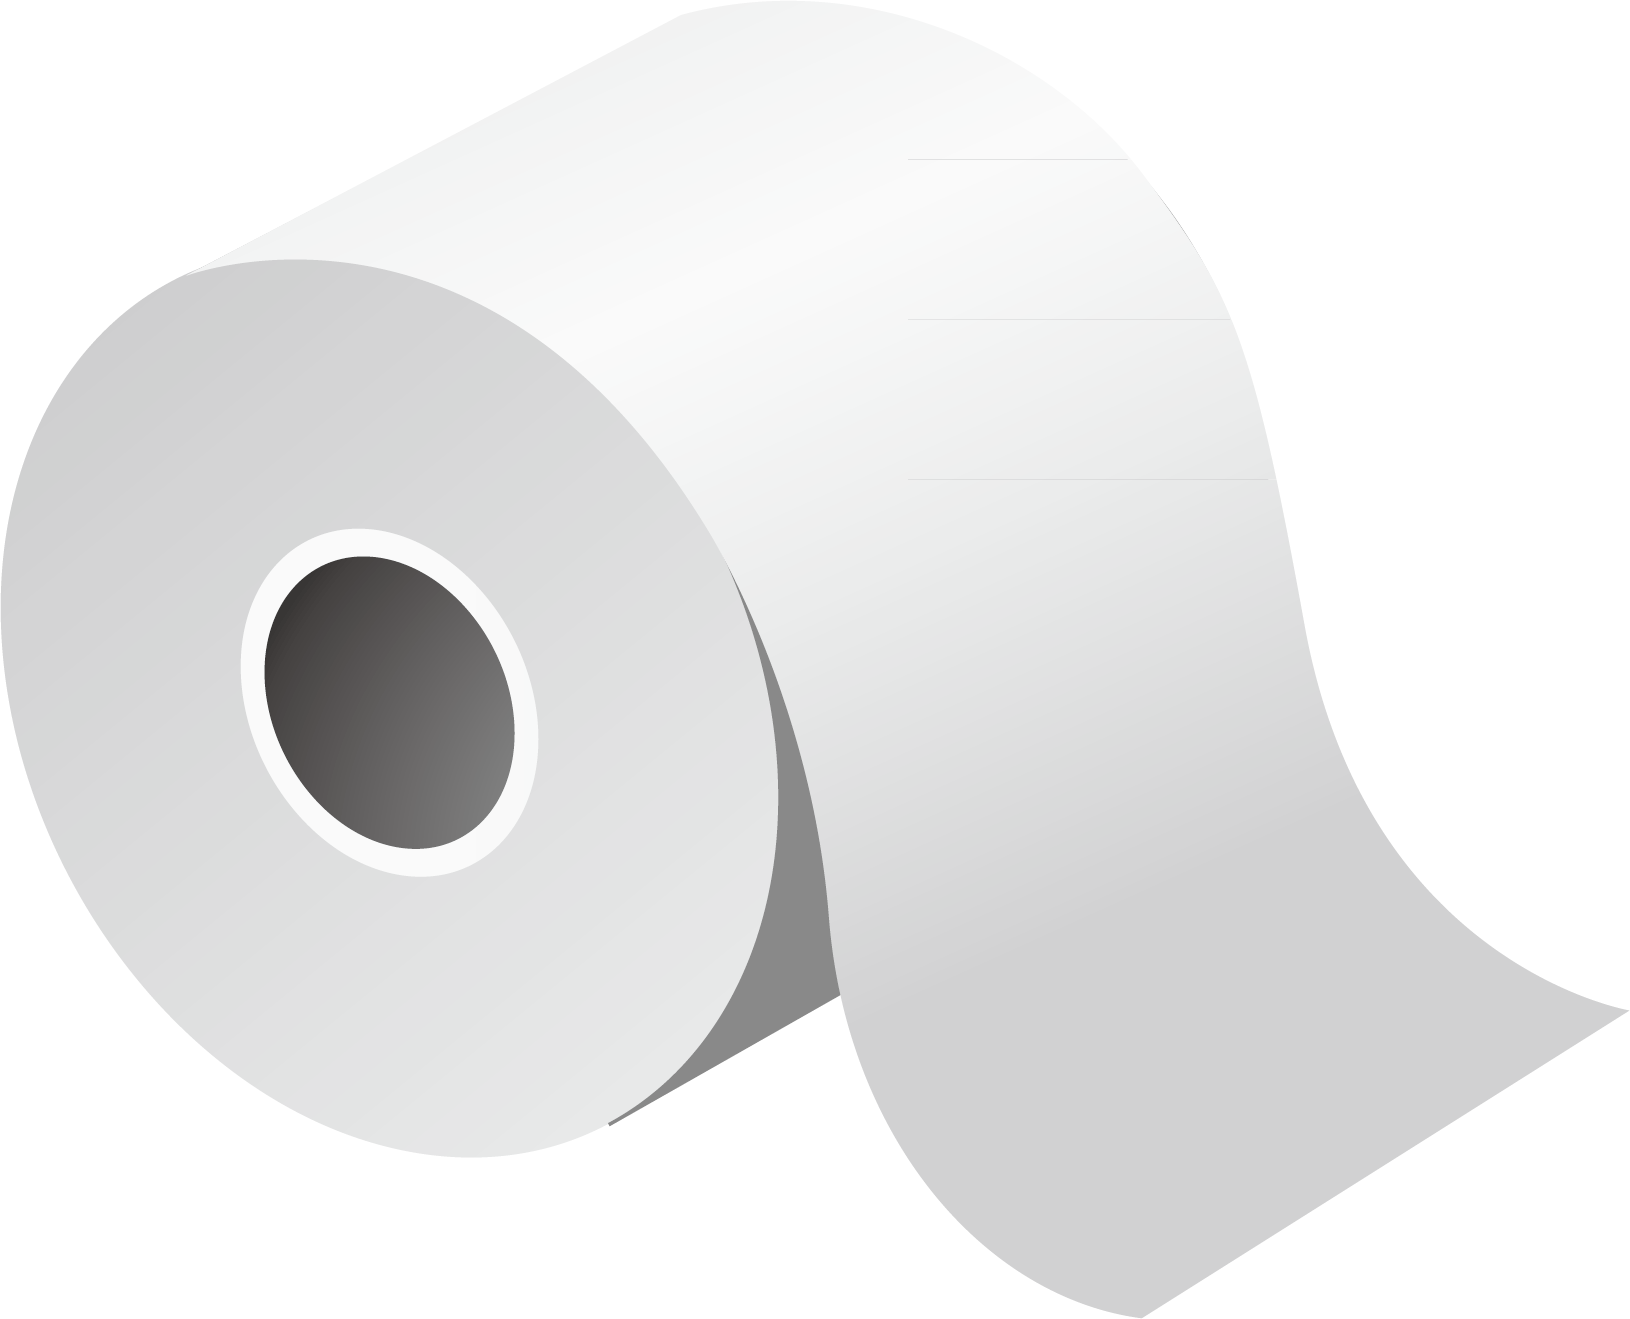 Toilet Paper PNG HD Imahe